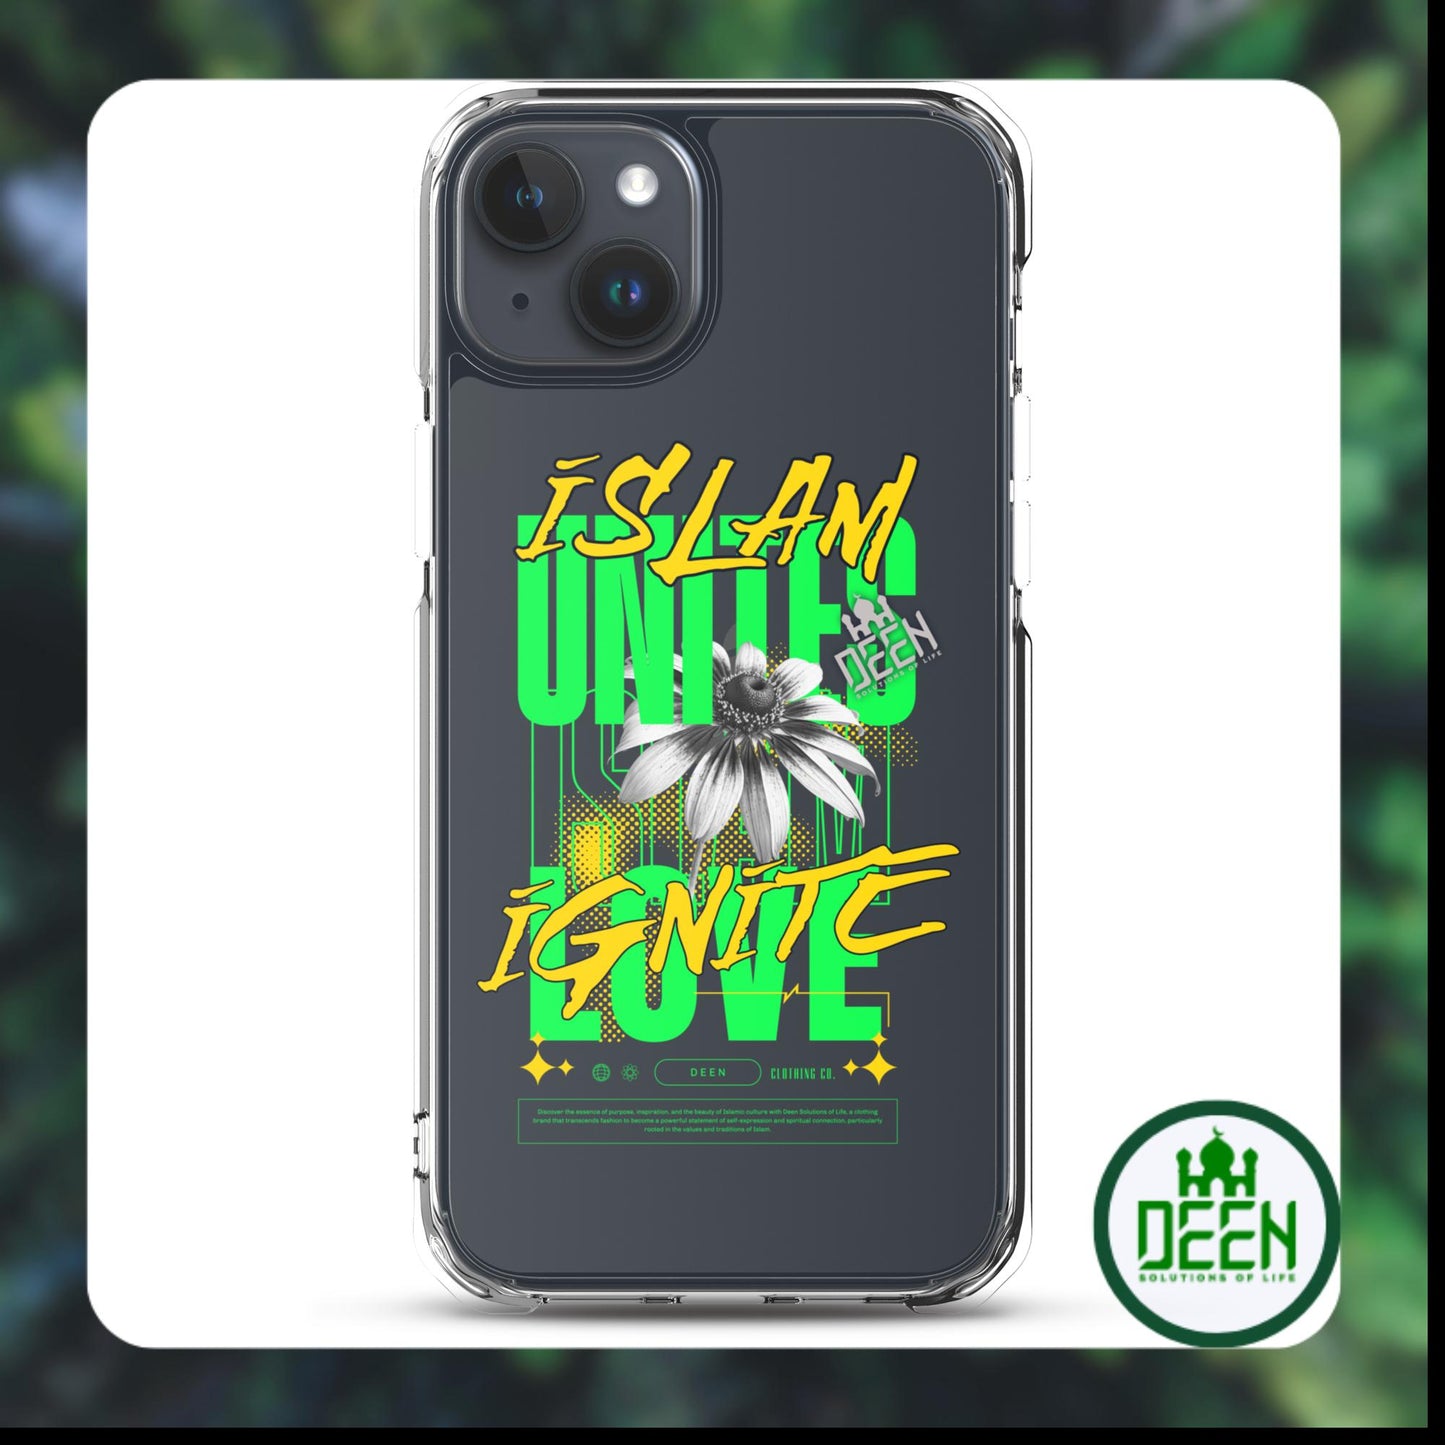 DEEN "Islam unites Love ignite" Clear Case for iPhone®